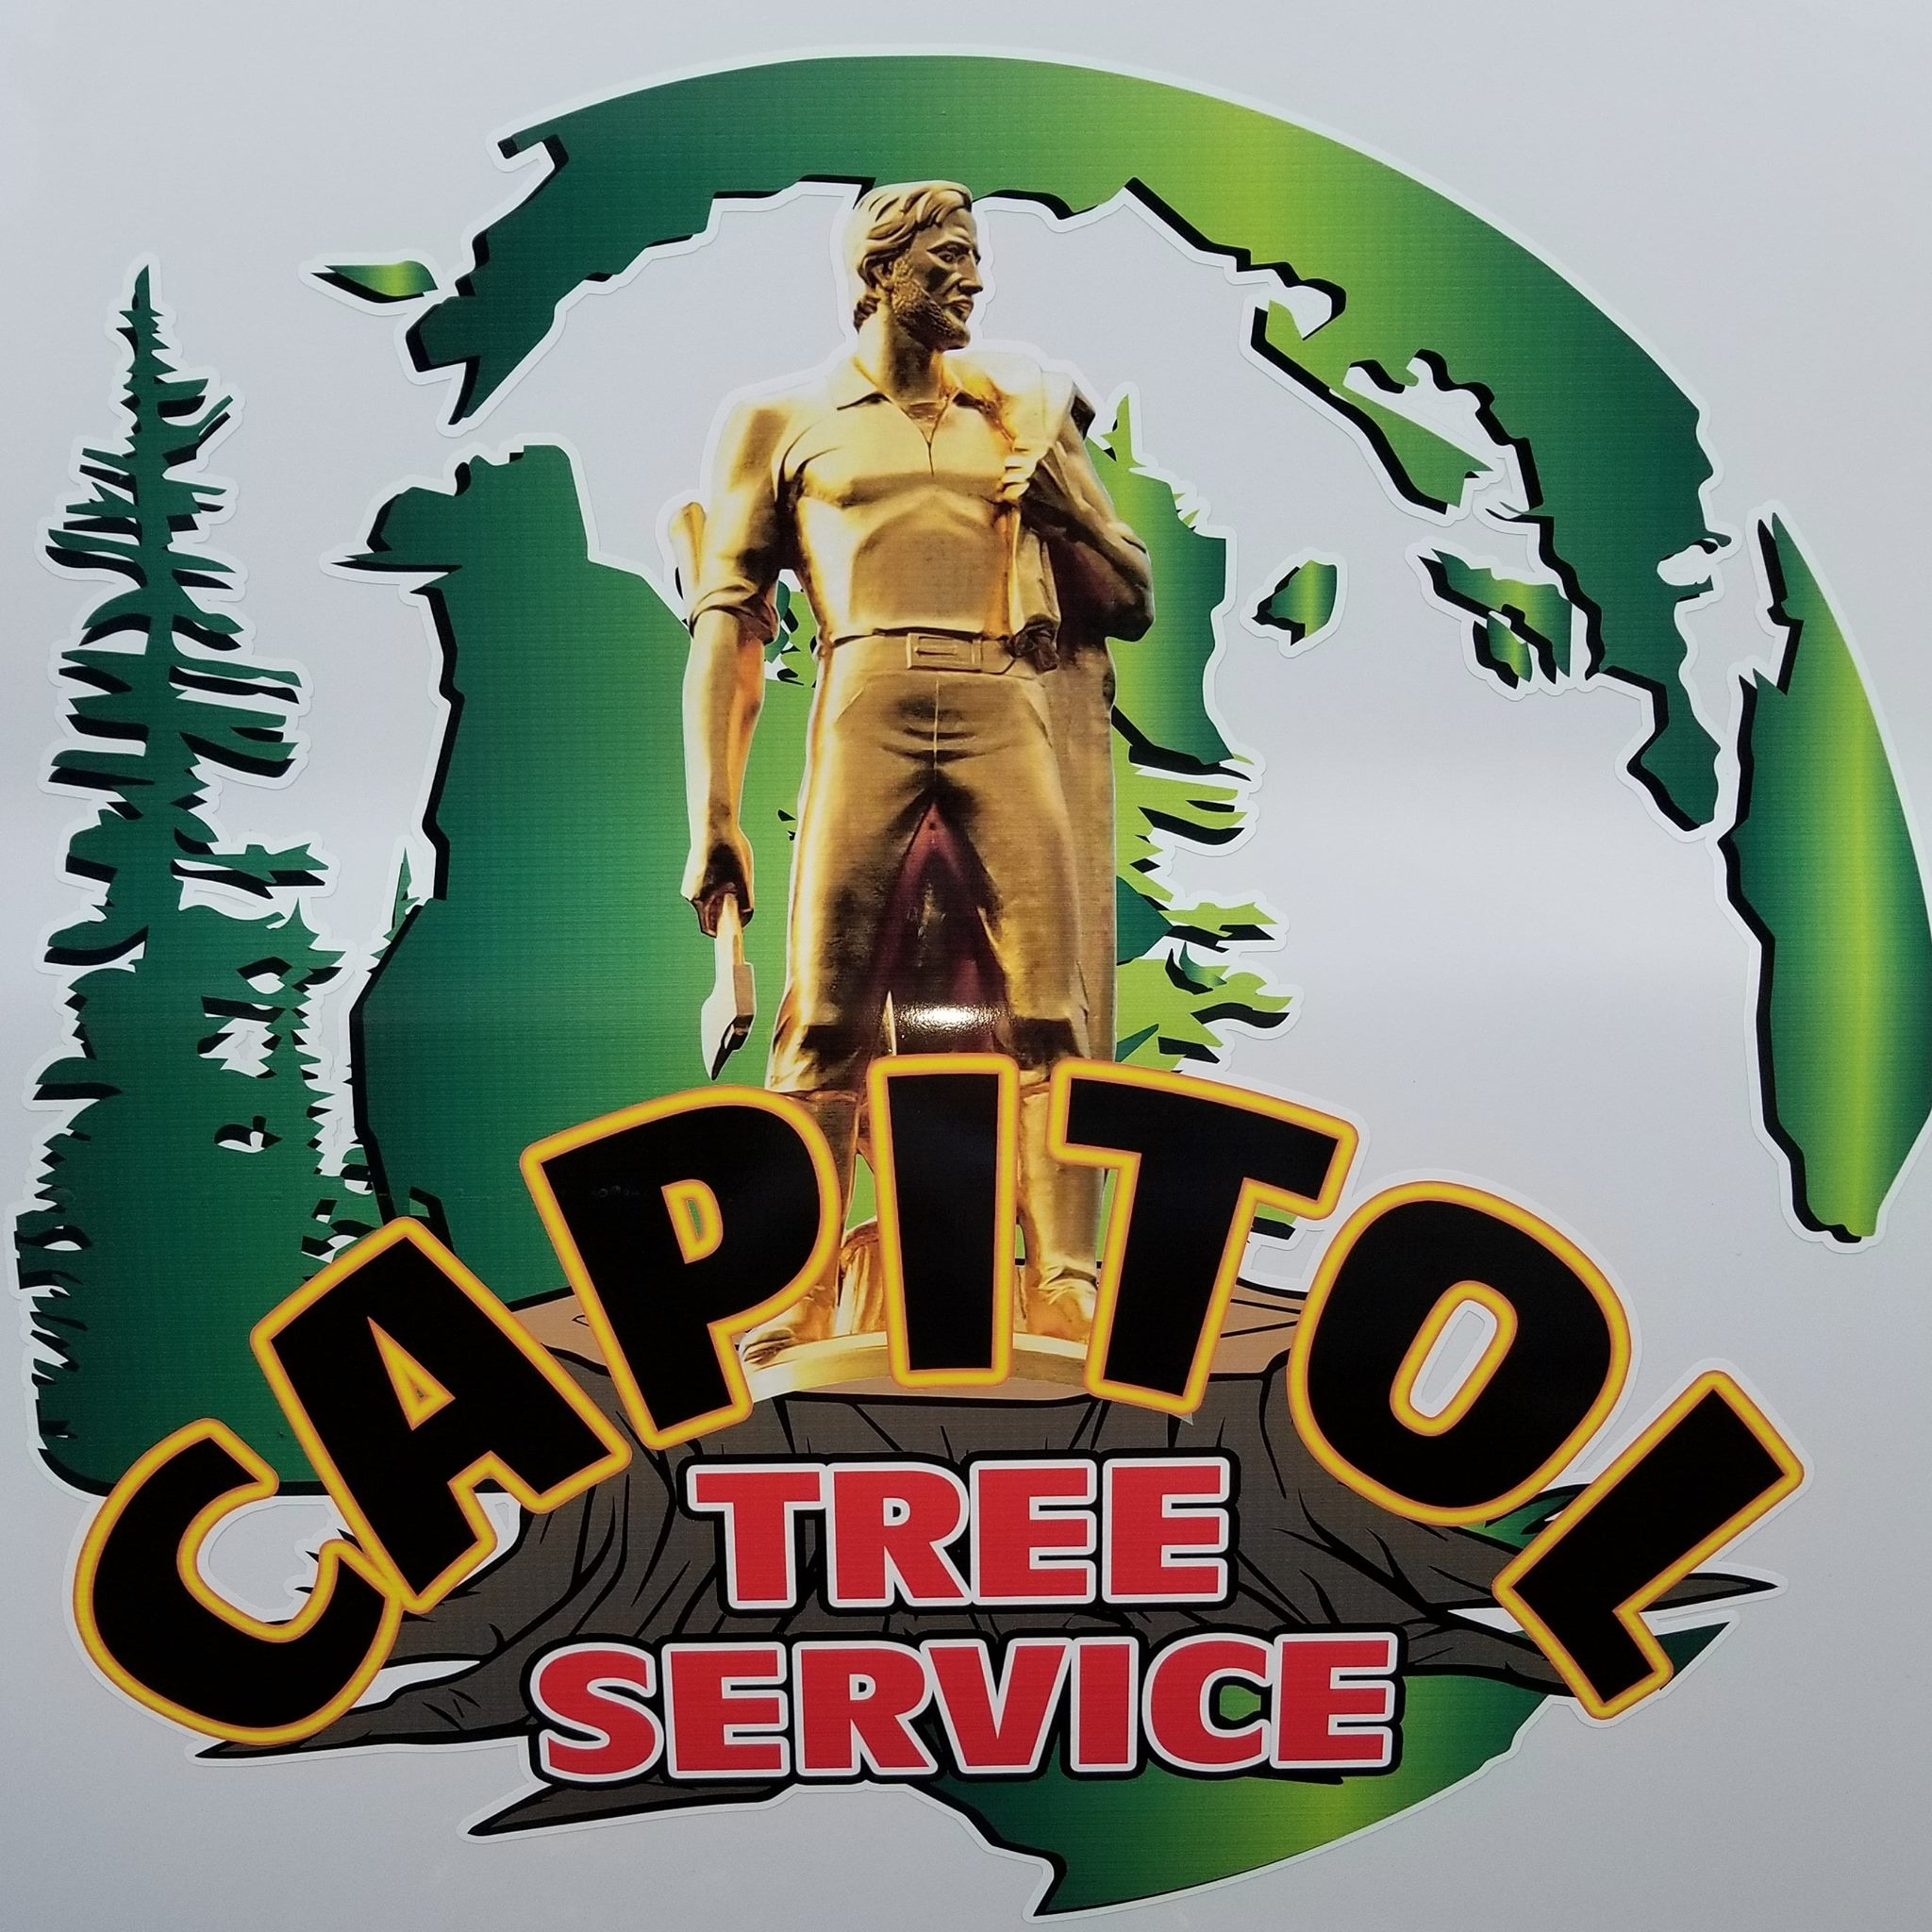 Capitol Tree Service